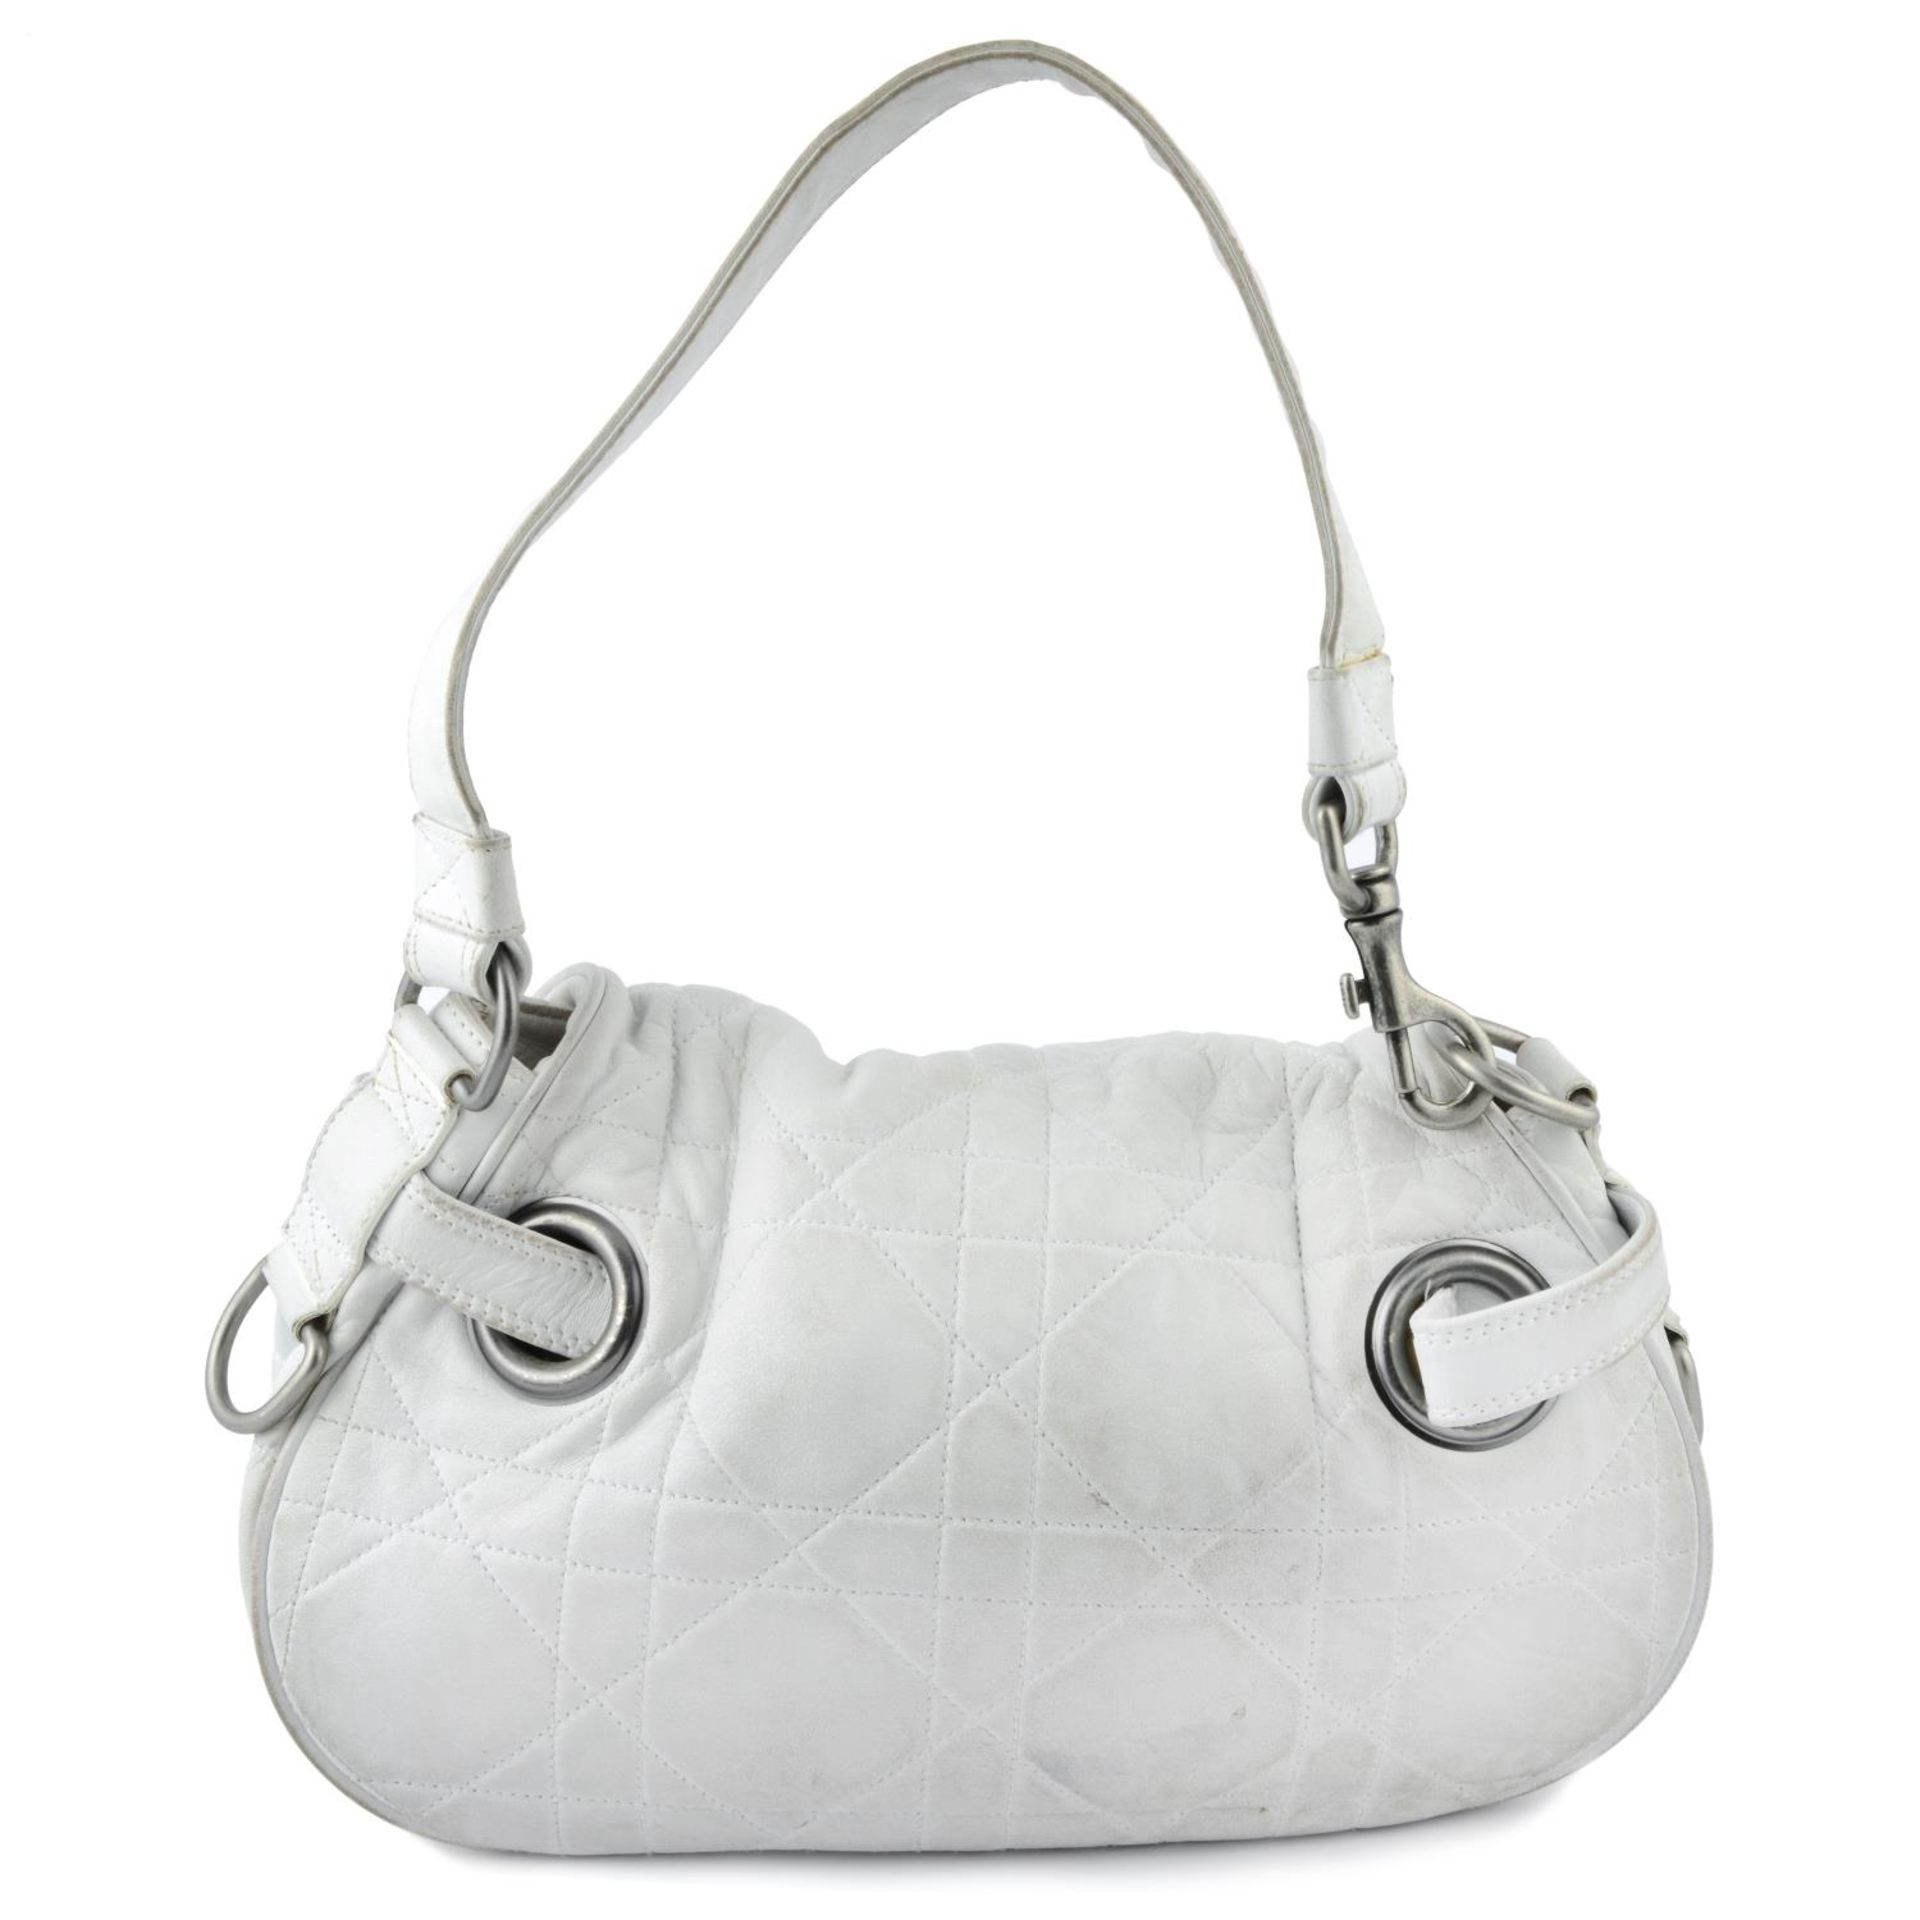 CHRISTIAN DIOR - a white leather cannage handbag. - Image 3 of 4